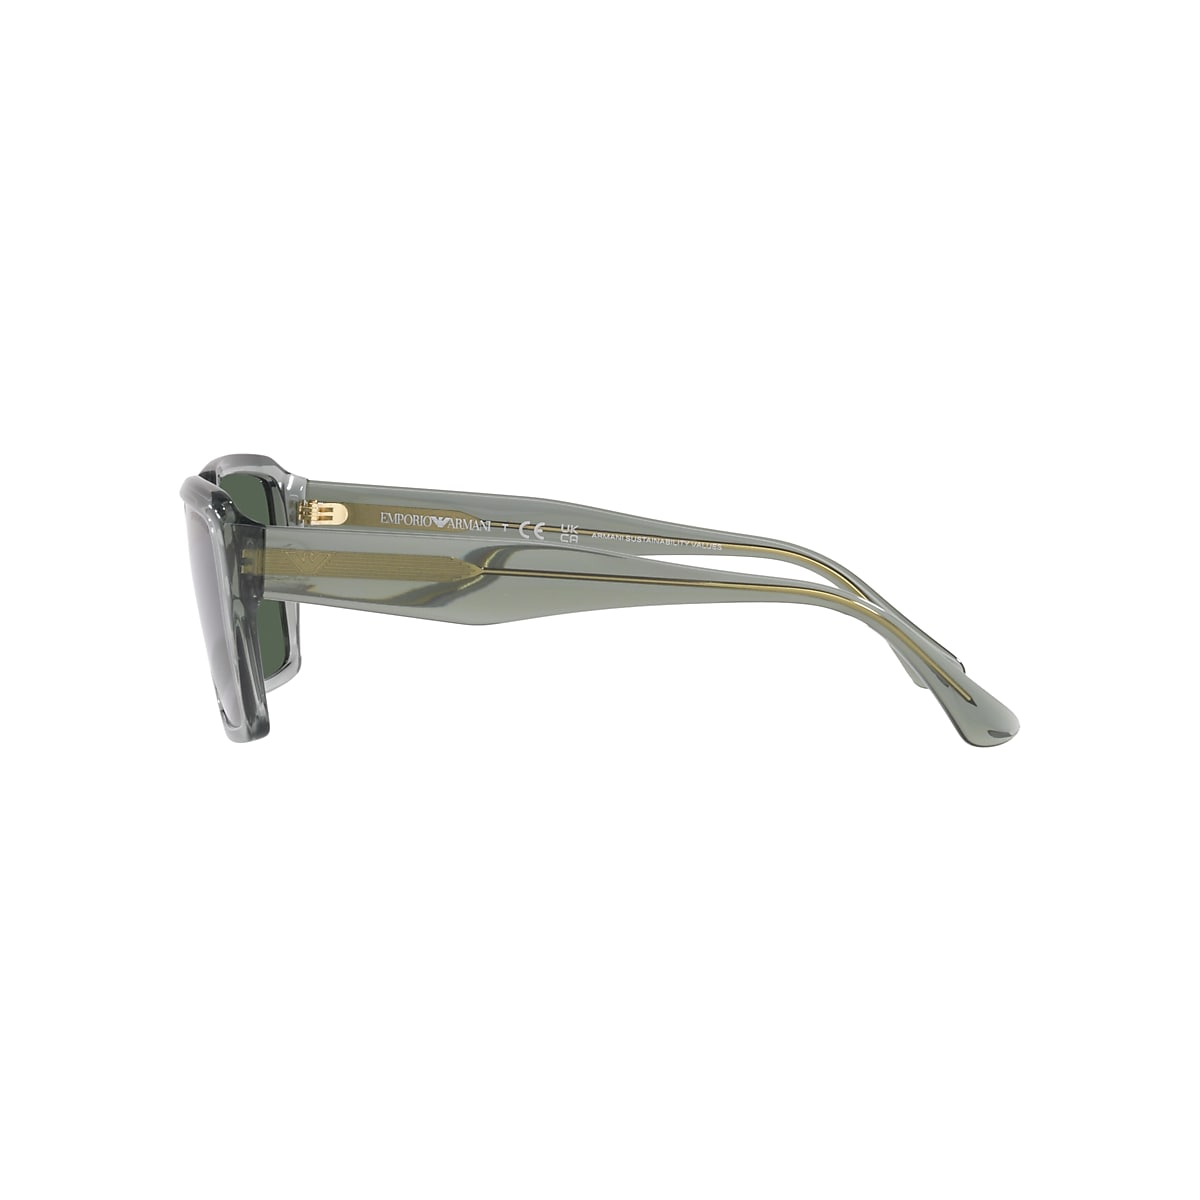 Emporio Armani EA4186 58 Dark Green & Shiny Transparent Green Sunglasses |  Sunglass Hut USA